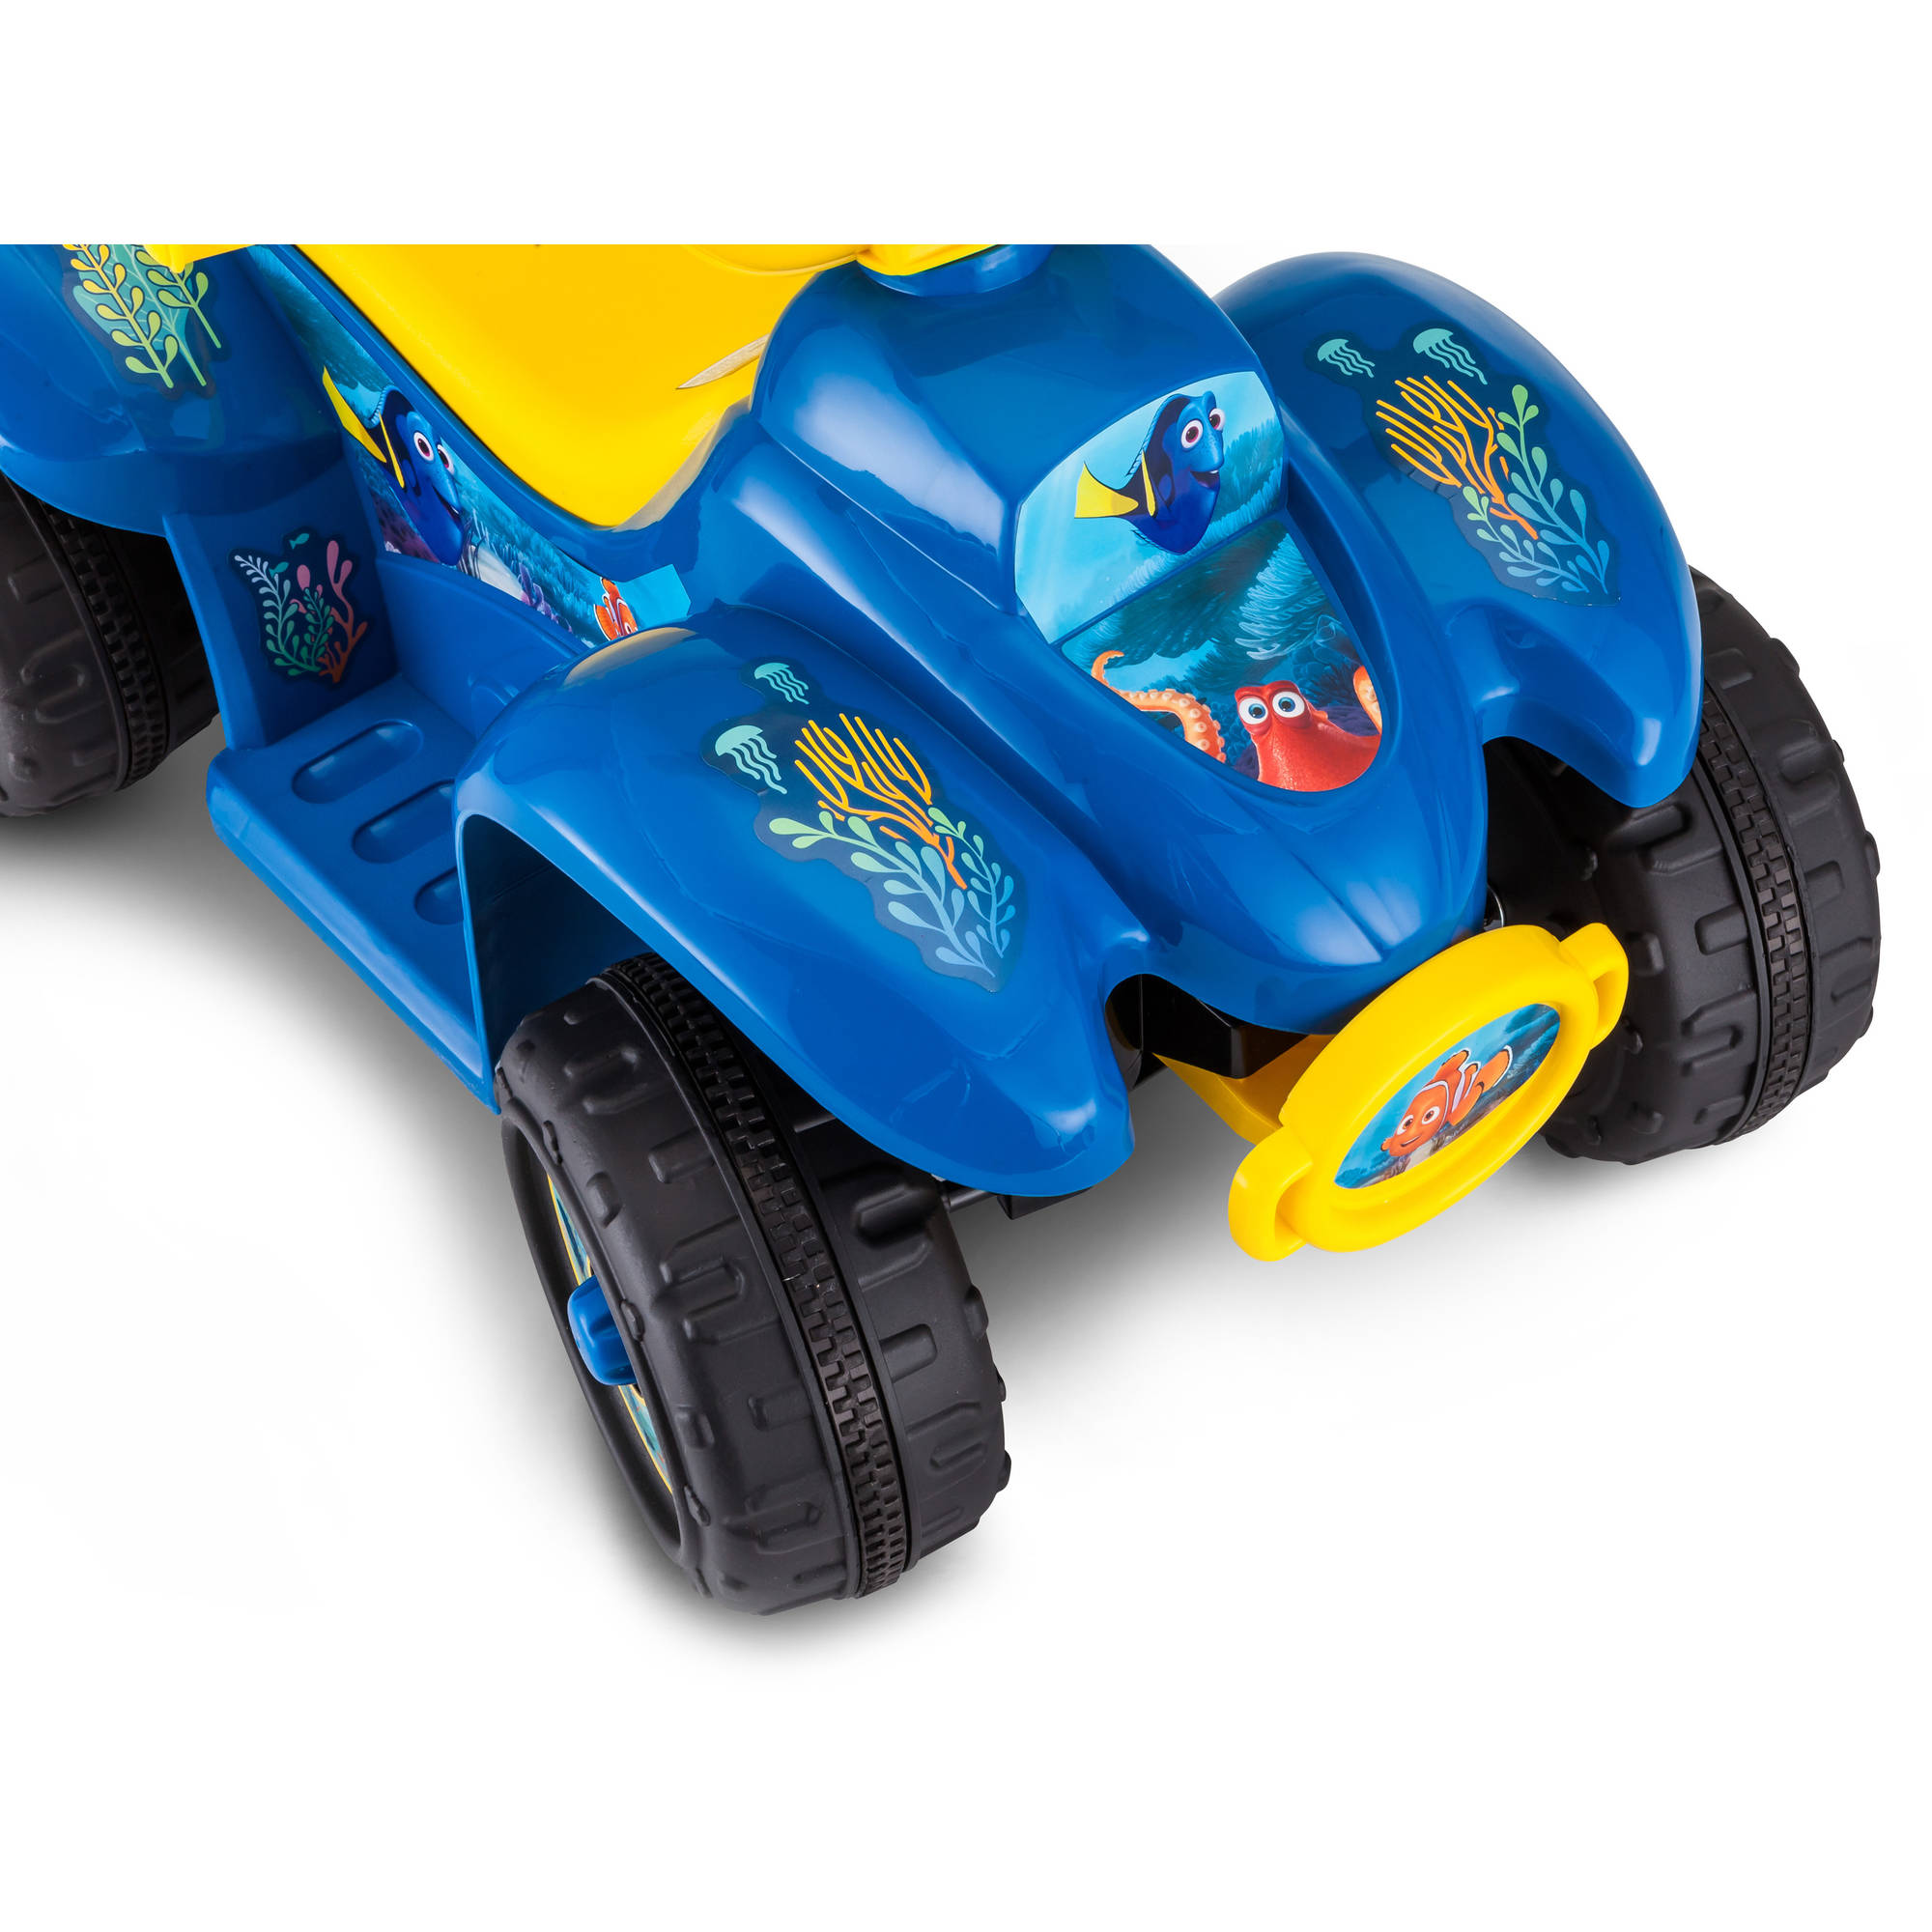 Disney Finding Dory 6V Toddler Quad Ride On - image 3 of 5